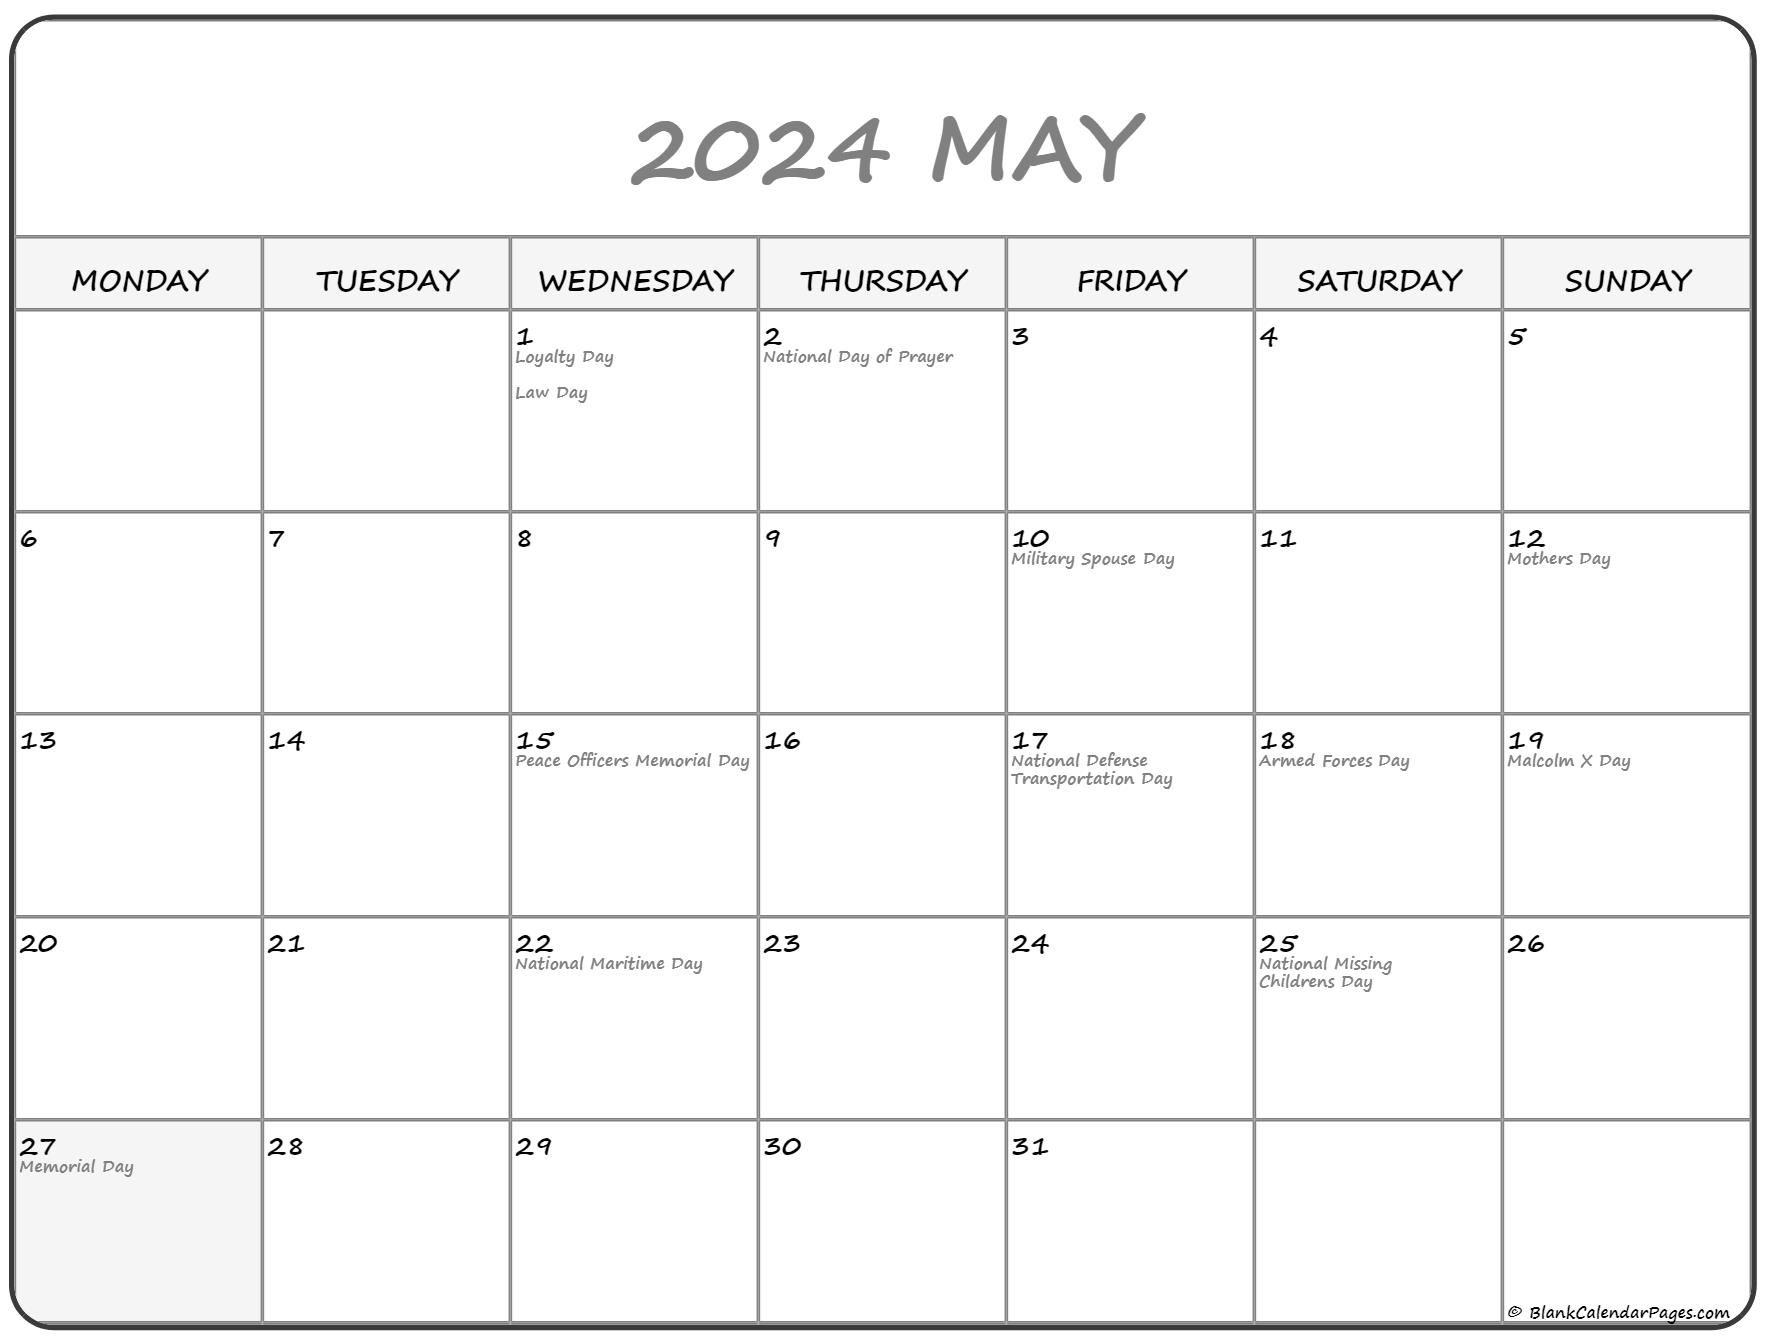 monday-2023-calendar-horizontal-calendar-quickly-january-2023-monday